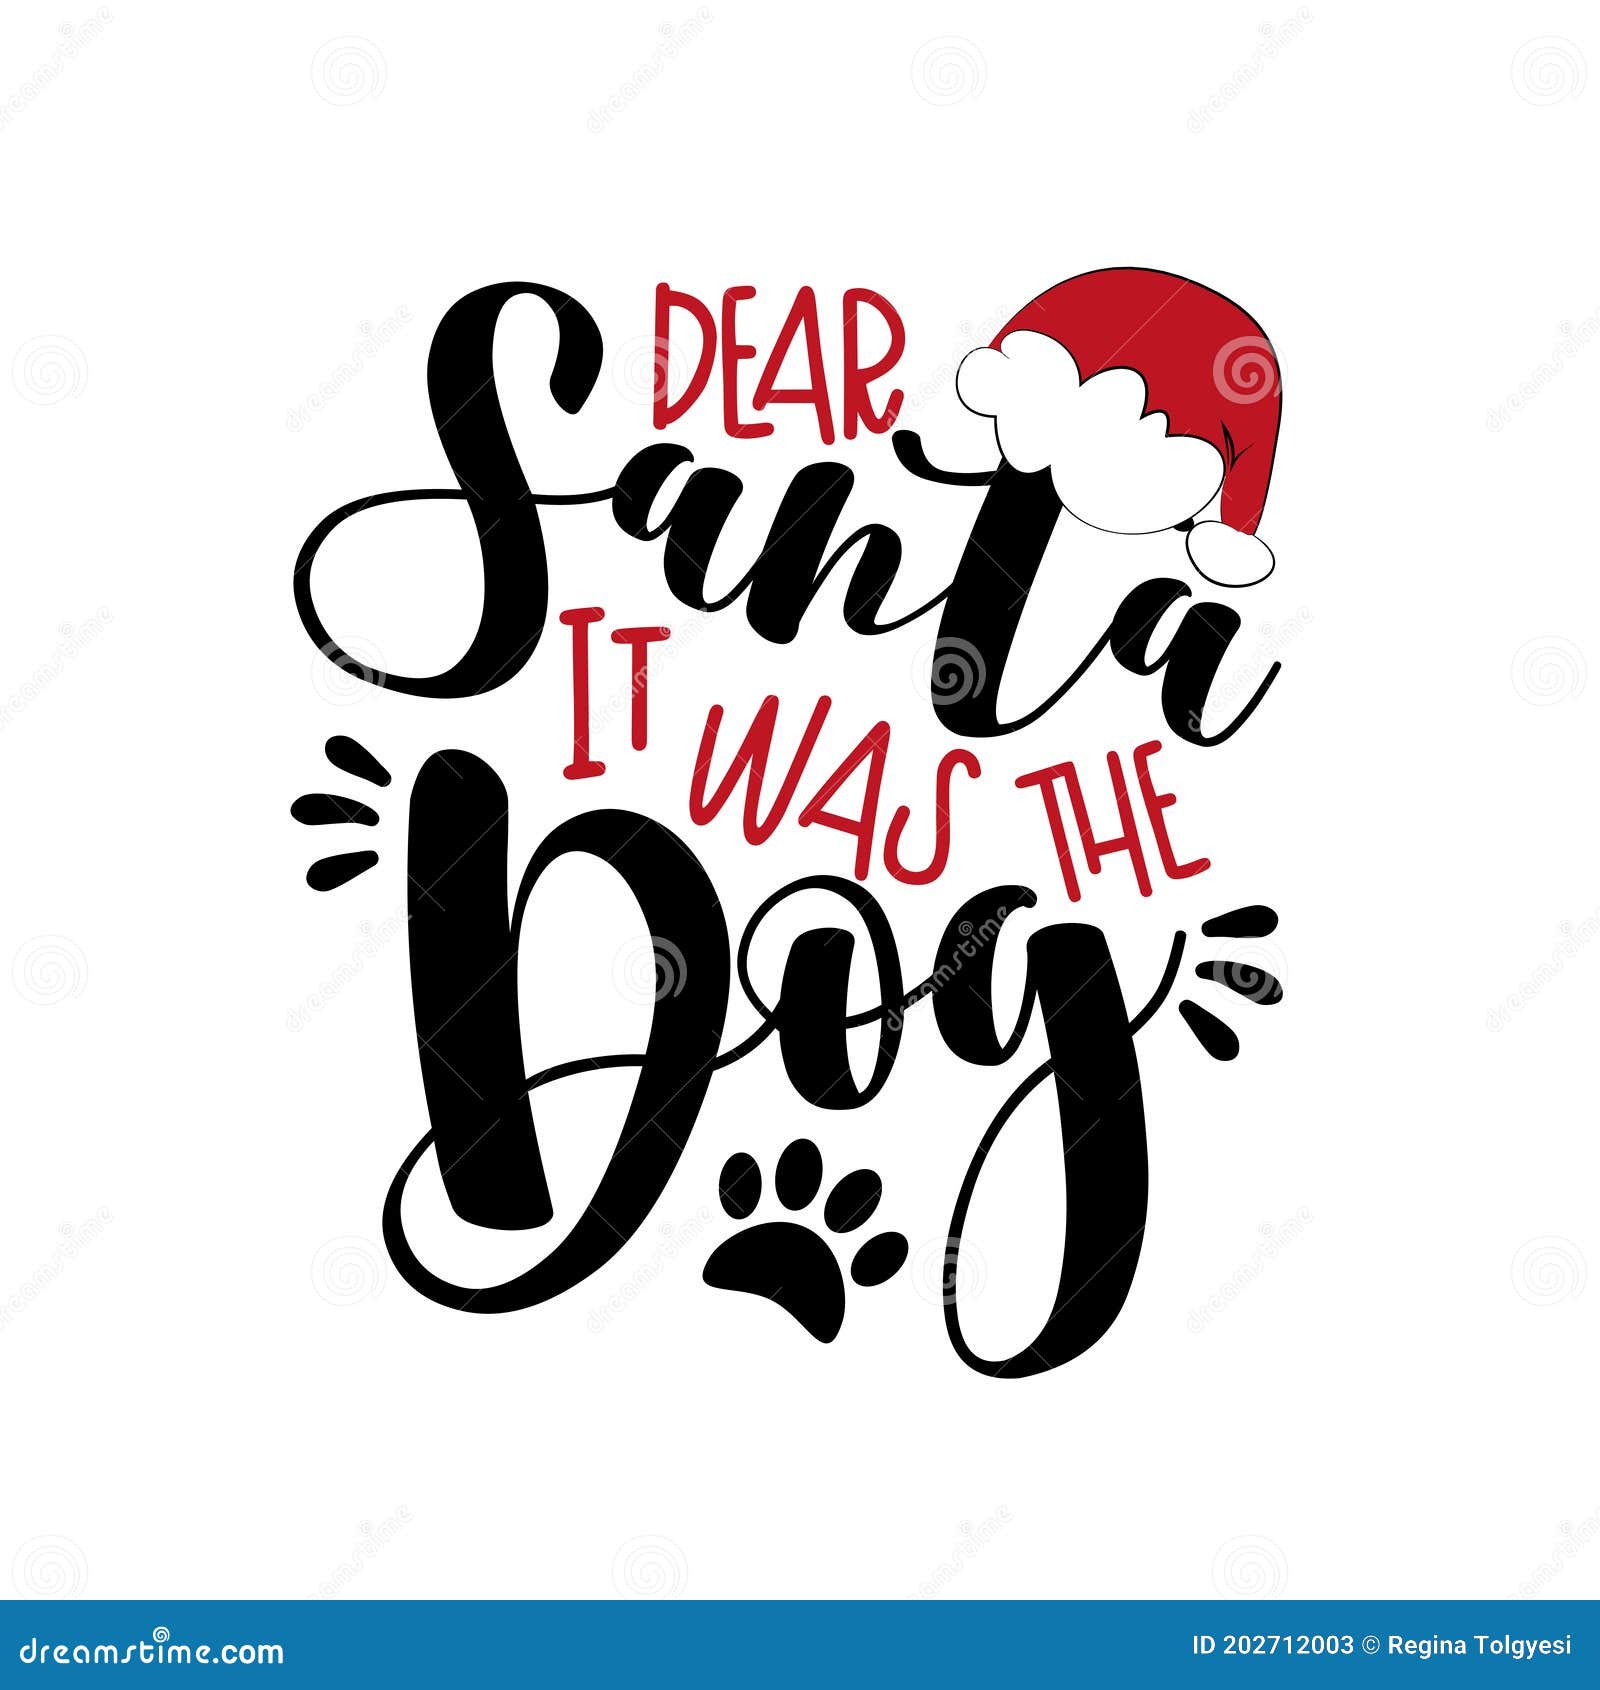 dear santa it was the dog- funny phrase for christmas